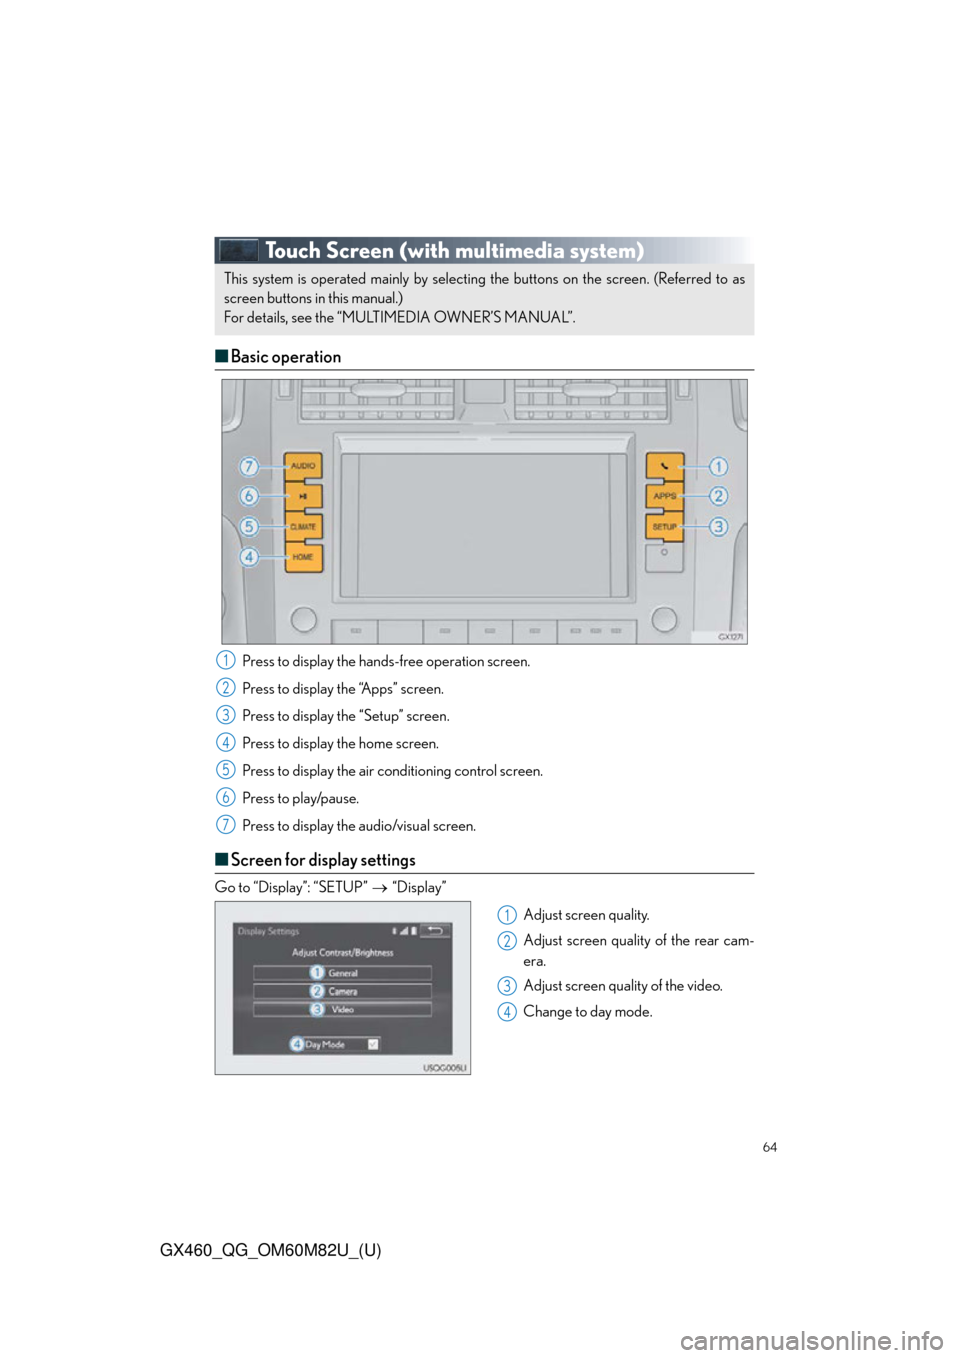 Lexus GX460 2016  Multimedia Manual / 64
GX460_QG_OM60M82U_(U)
Touch Screen (with multimedia system)
■Basic operation
Press to display the hands-free operation screen.
Press to display the “Apps” screen.
Press to display the “Setu